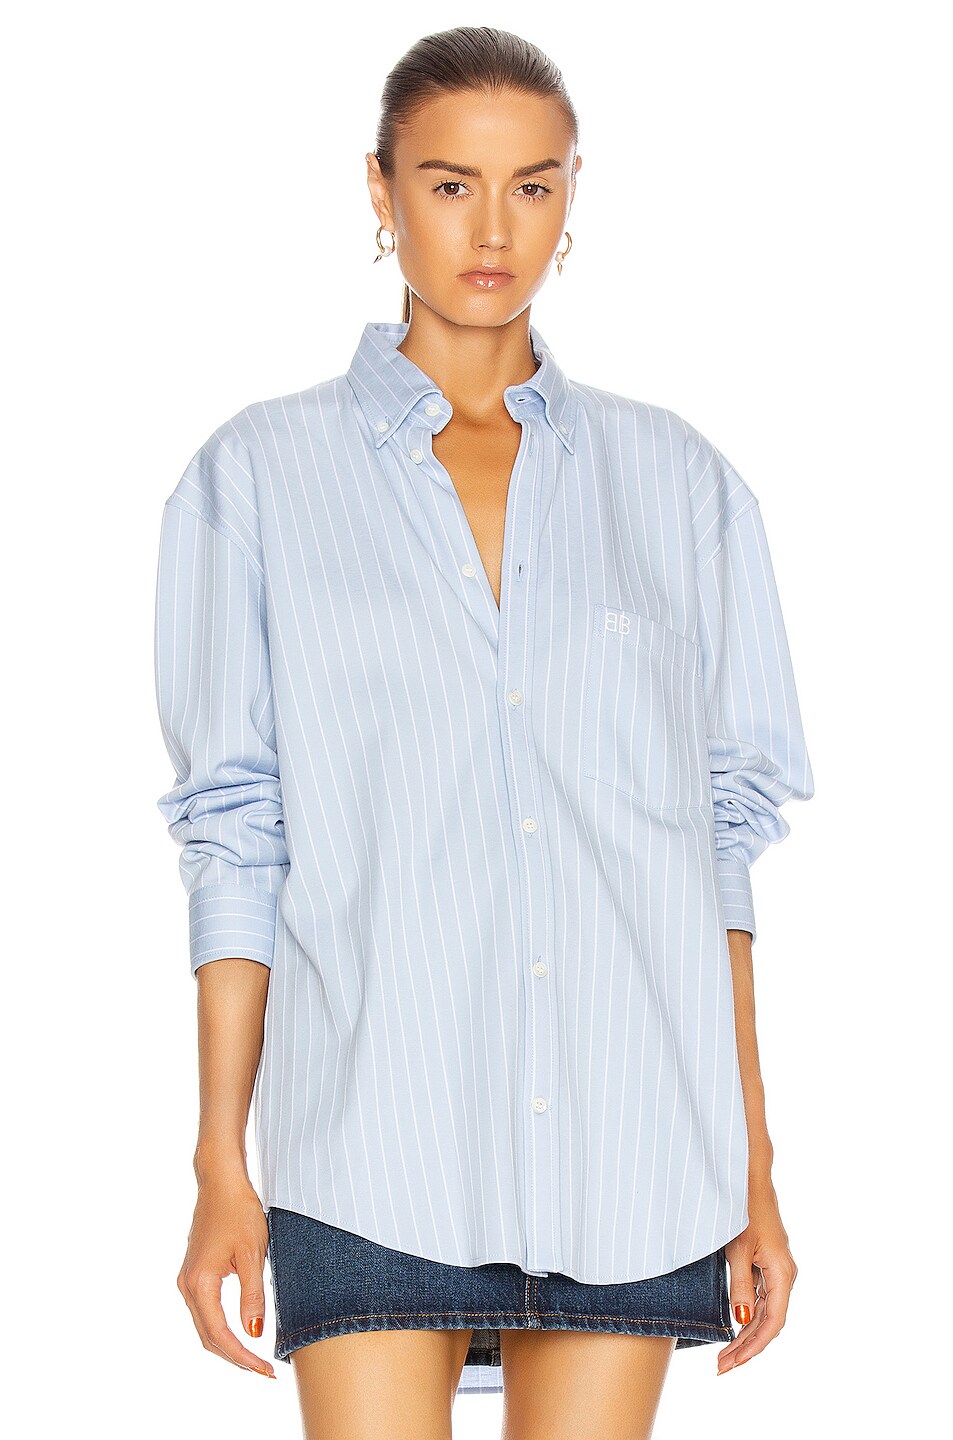 Balenciaga Long Sleeve Large Shirt in Sky Blue & White | FWRD